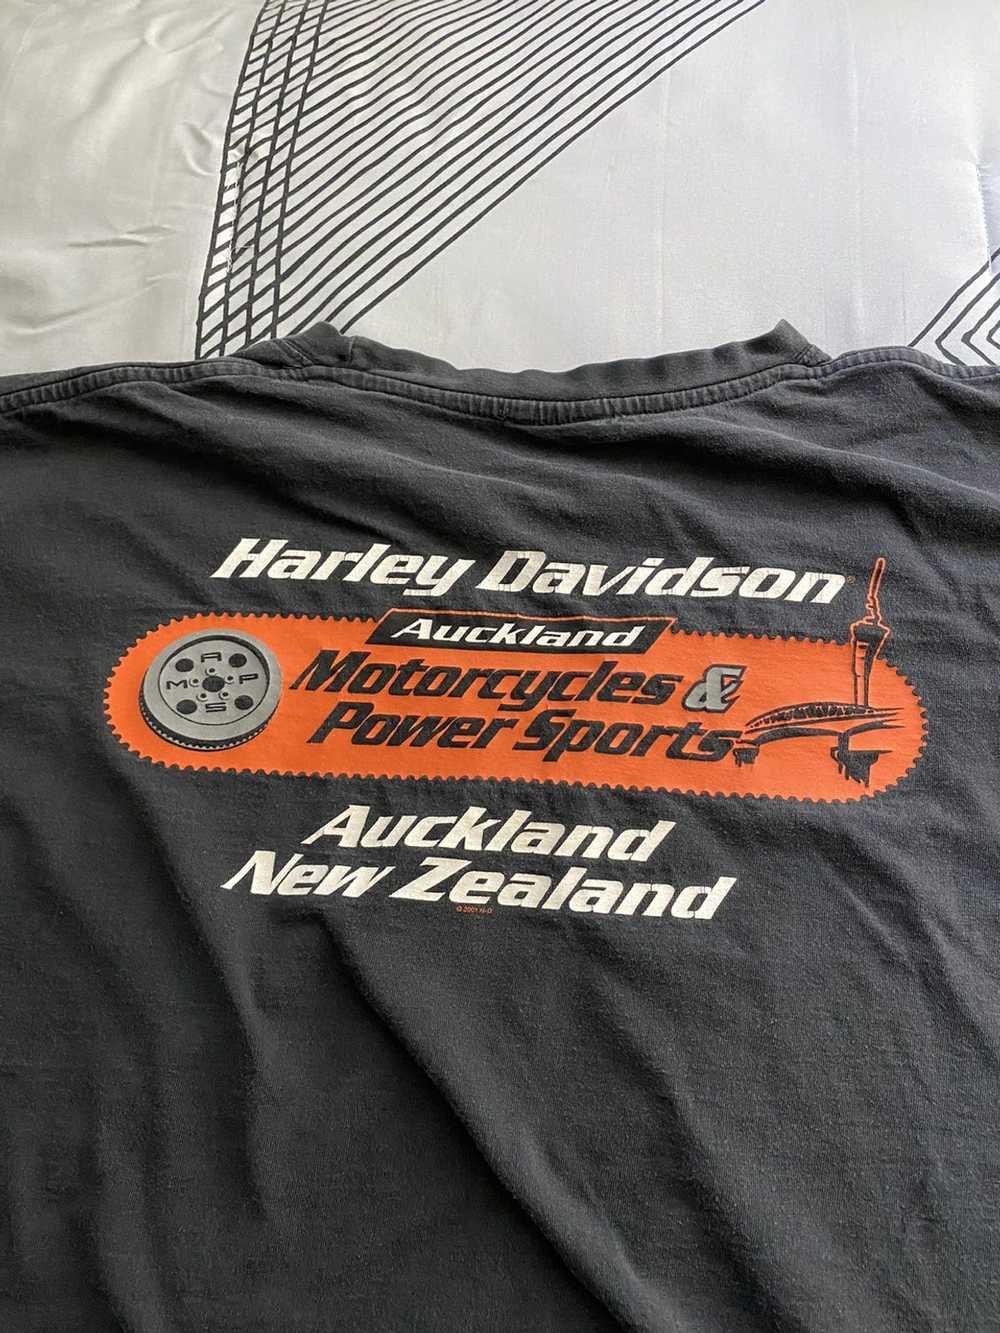 Harley Davidson Harley Davidson New Zealand T-shi… - image 5